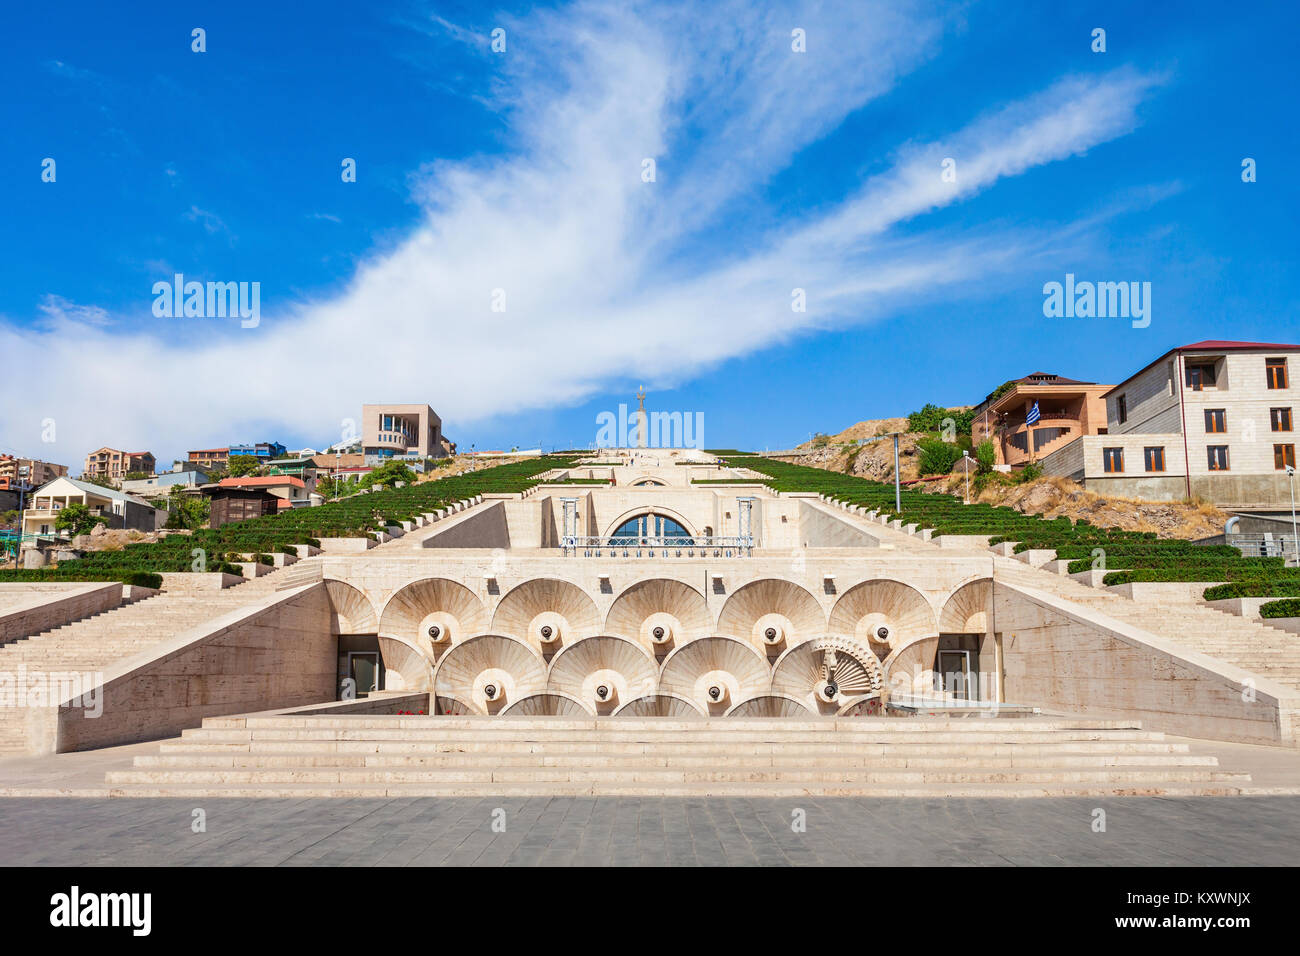 YEREVAN, ARMENIA - SEPTEMBER 28, 2015: The Cascade is a giant stairway in Yerevan, Armenia. Inside Cascade is located the Cafesjian Museum of Art. Stock Photo